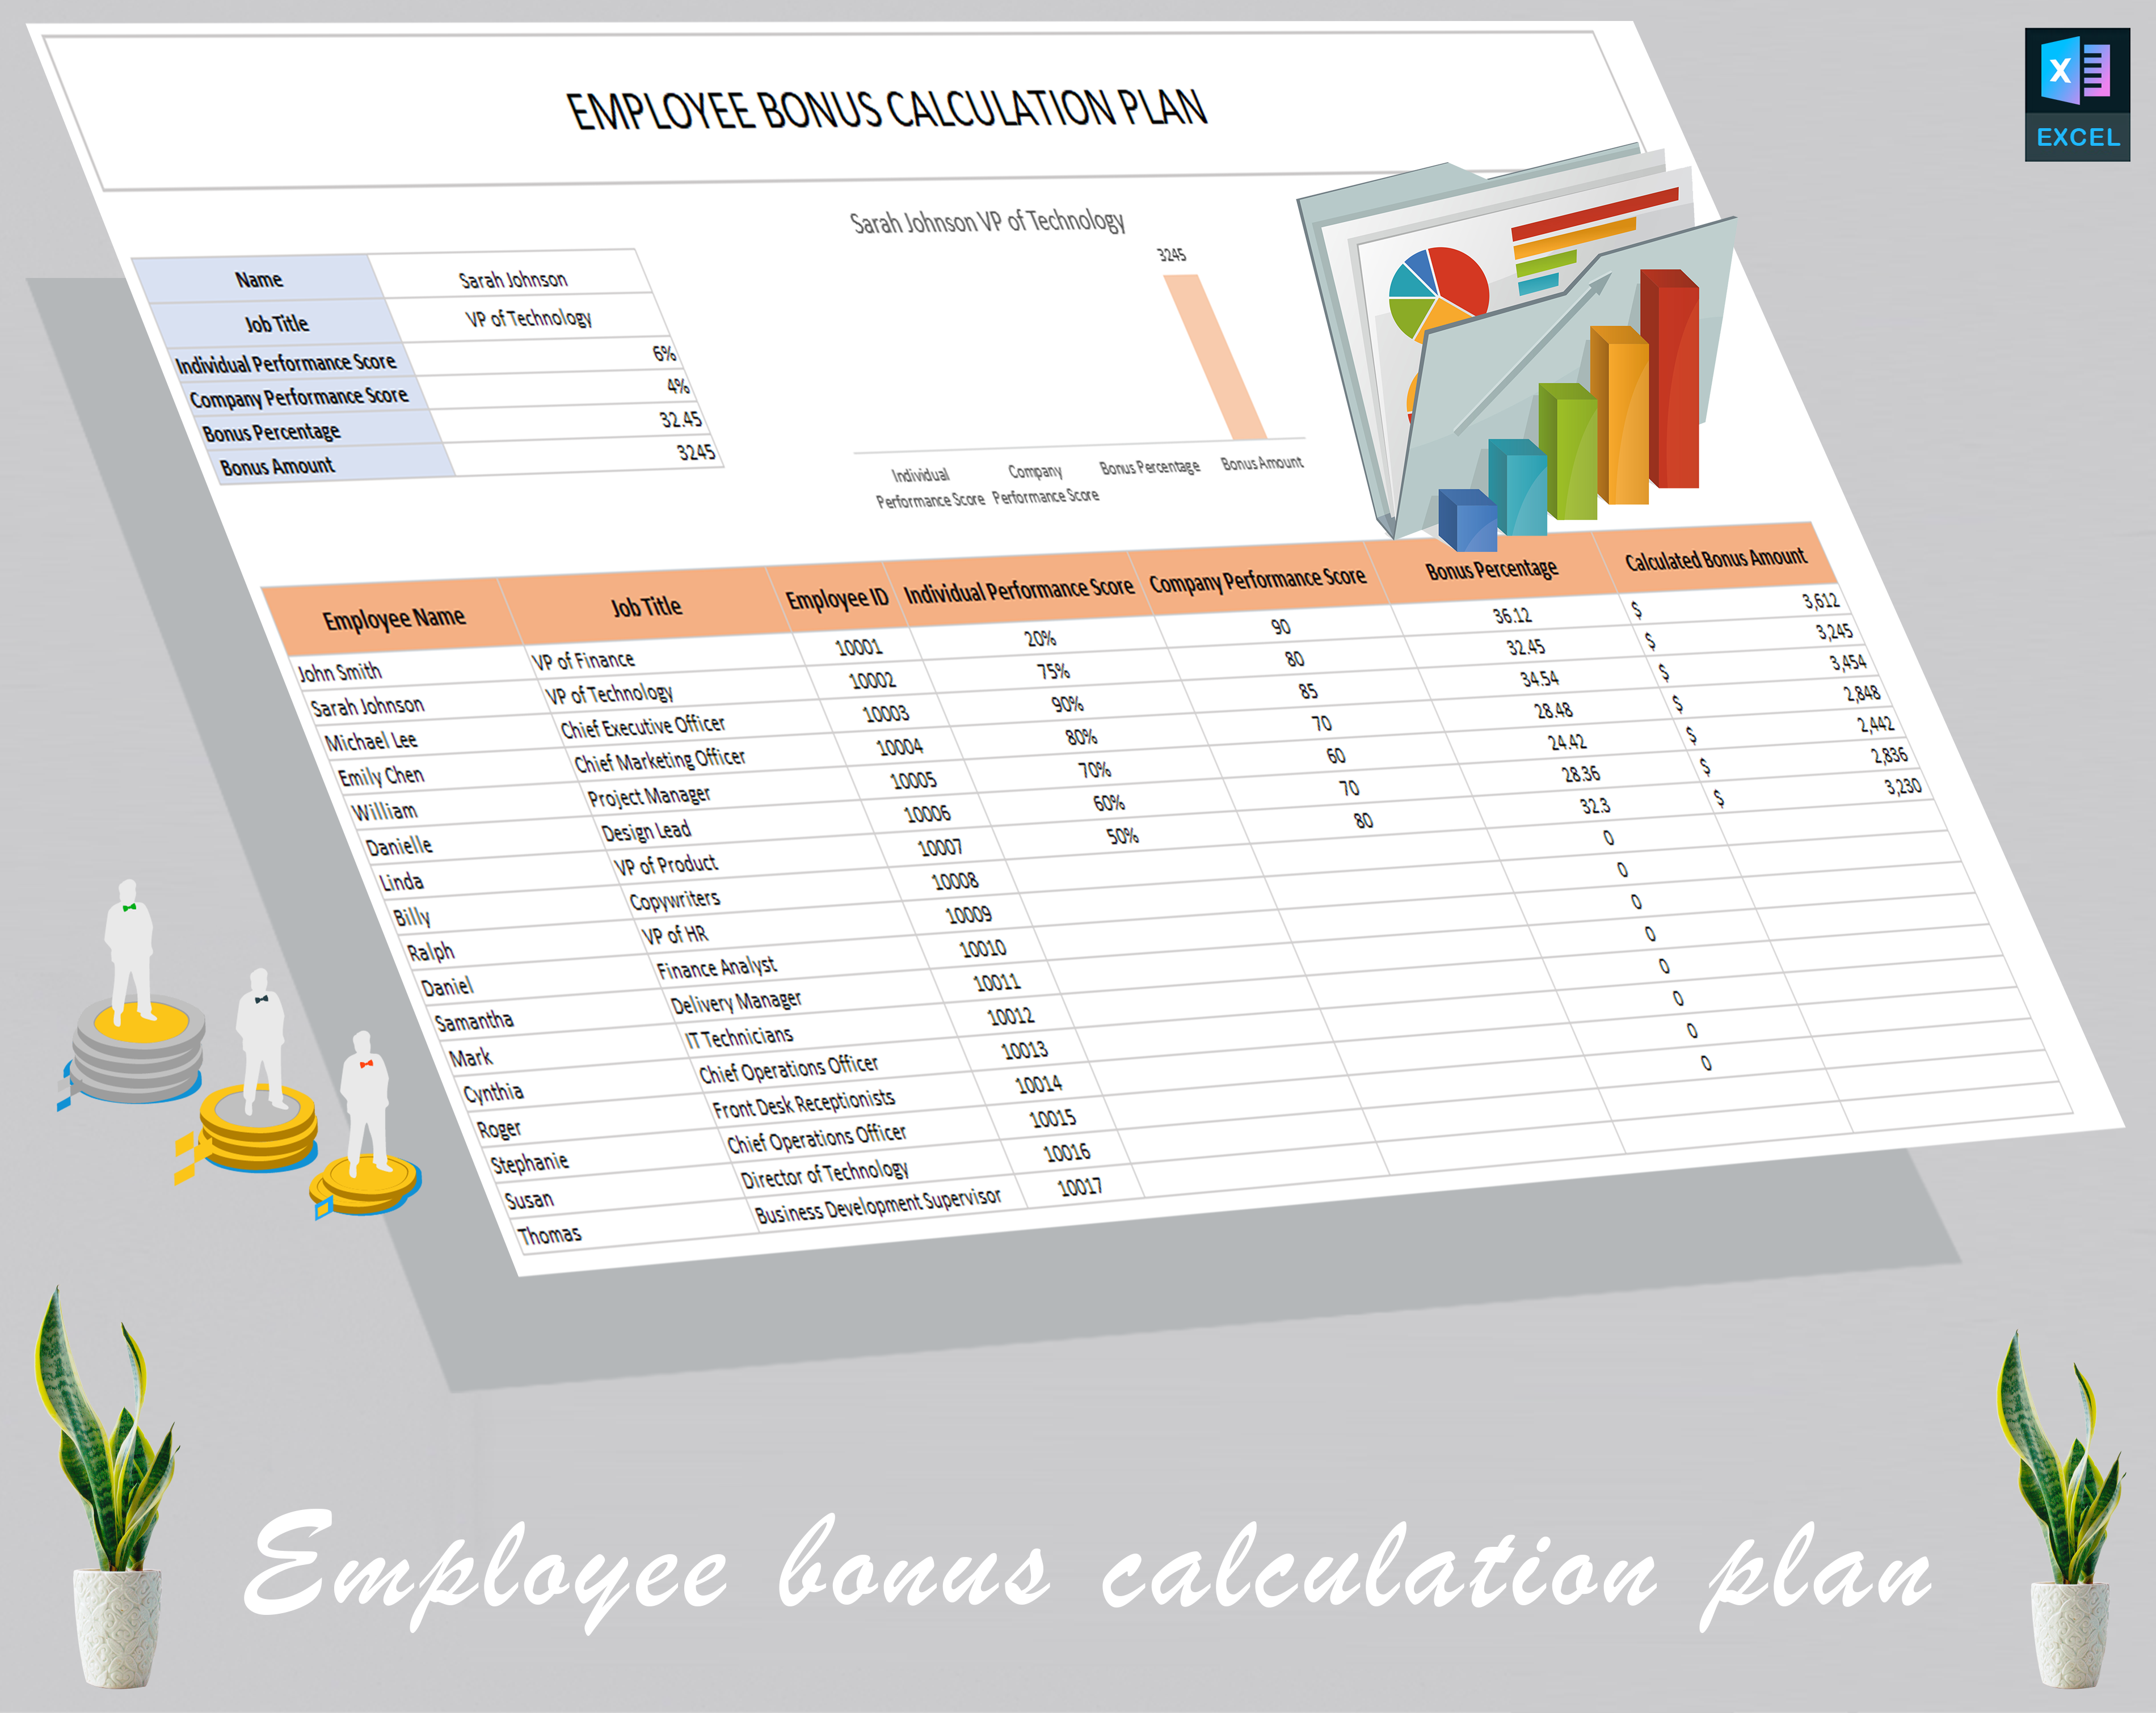 Employee bonus calculation plan